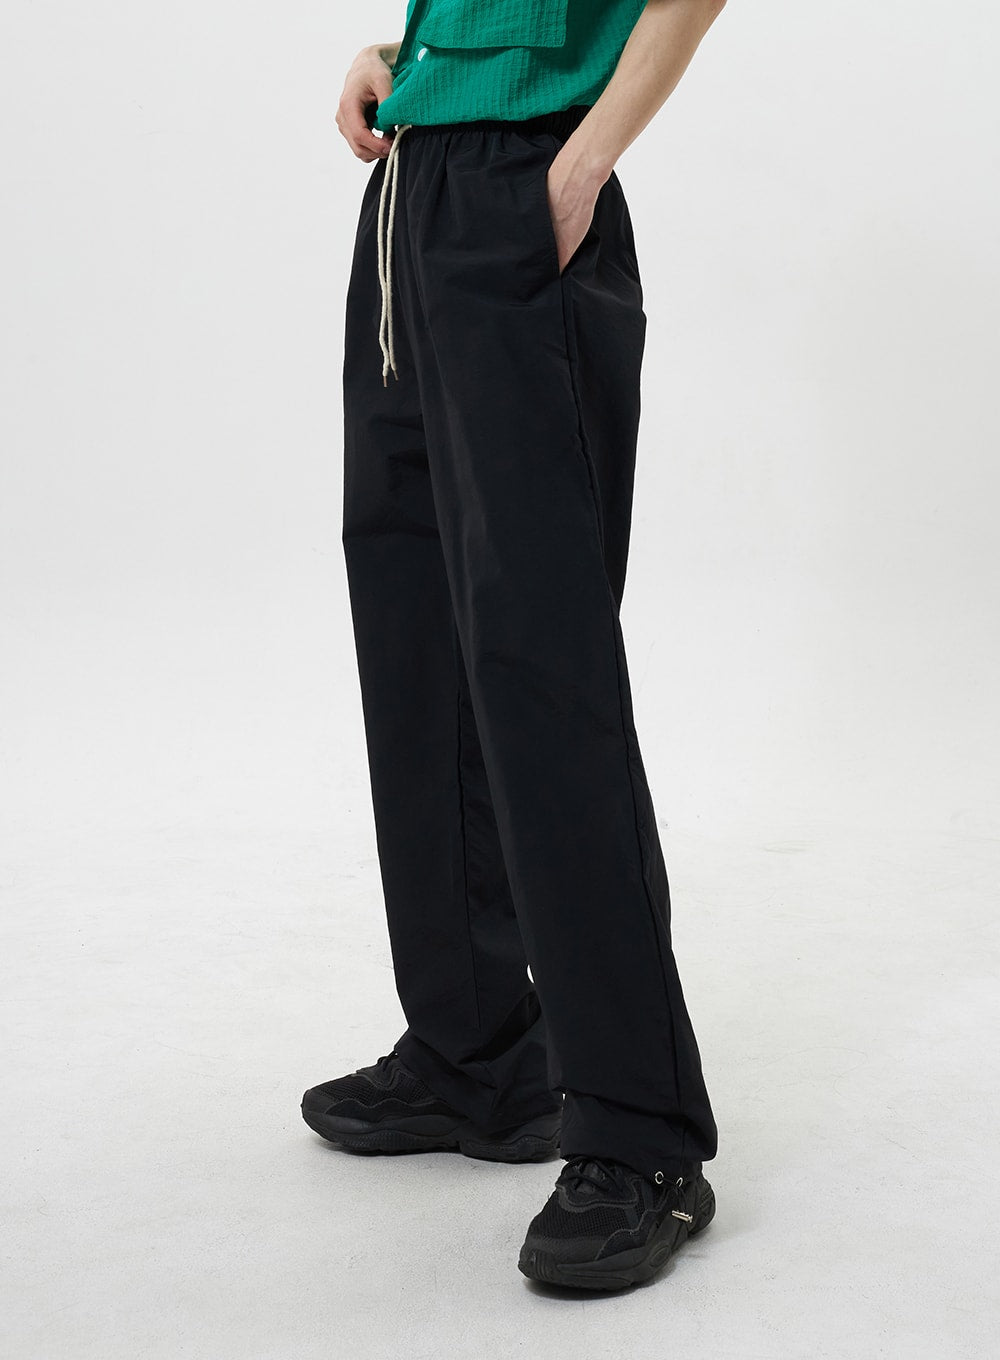 Vintage 90s Eastbay Black Nylon Track Pants Men's Size Medium | eBay